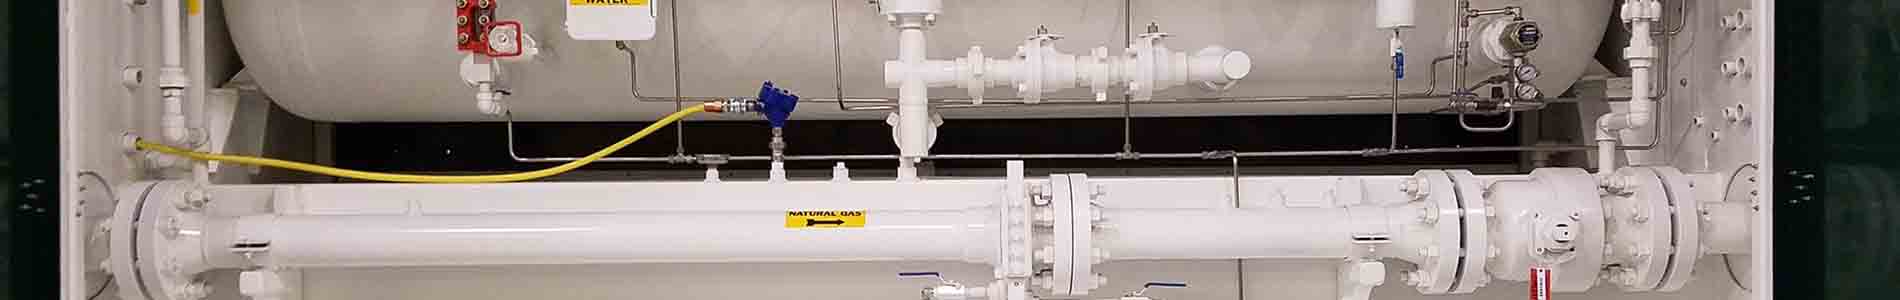 Natural gas separator